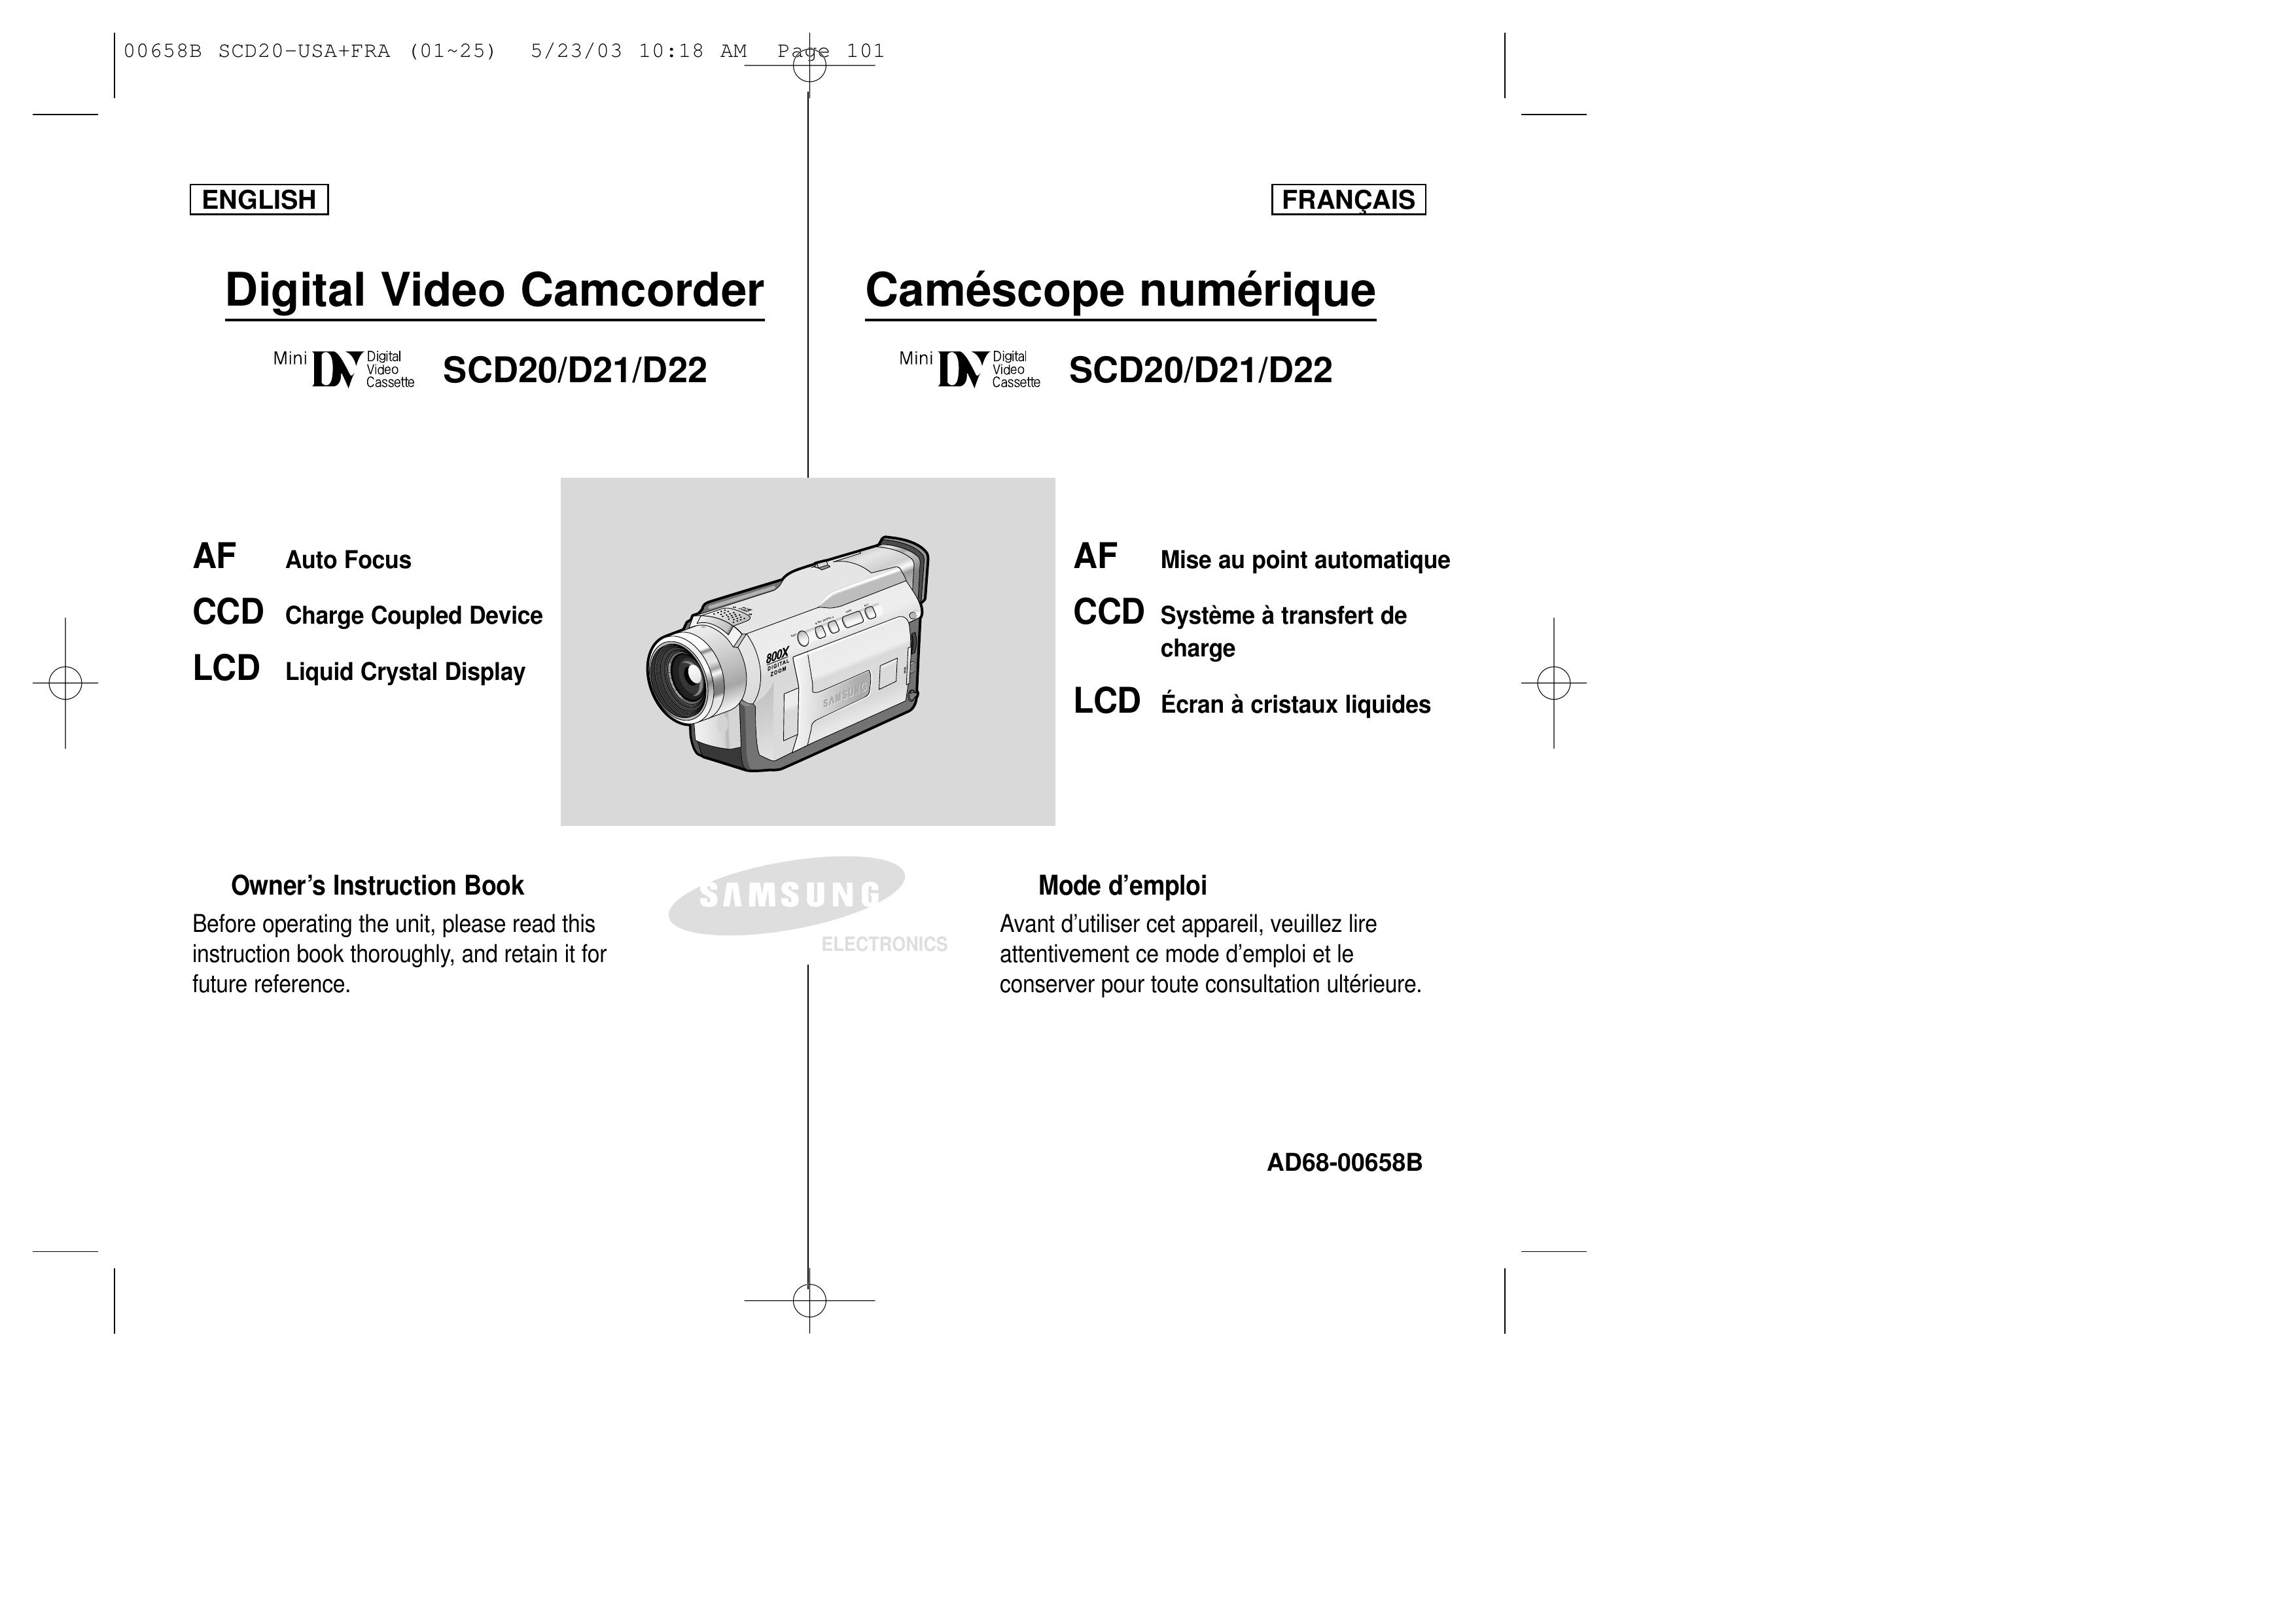 Samsung AD68-00658B Camcorder User Manual